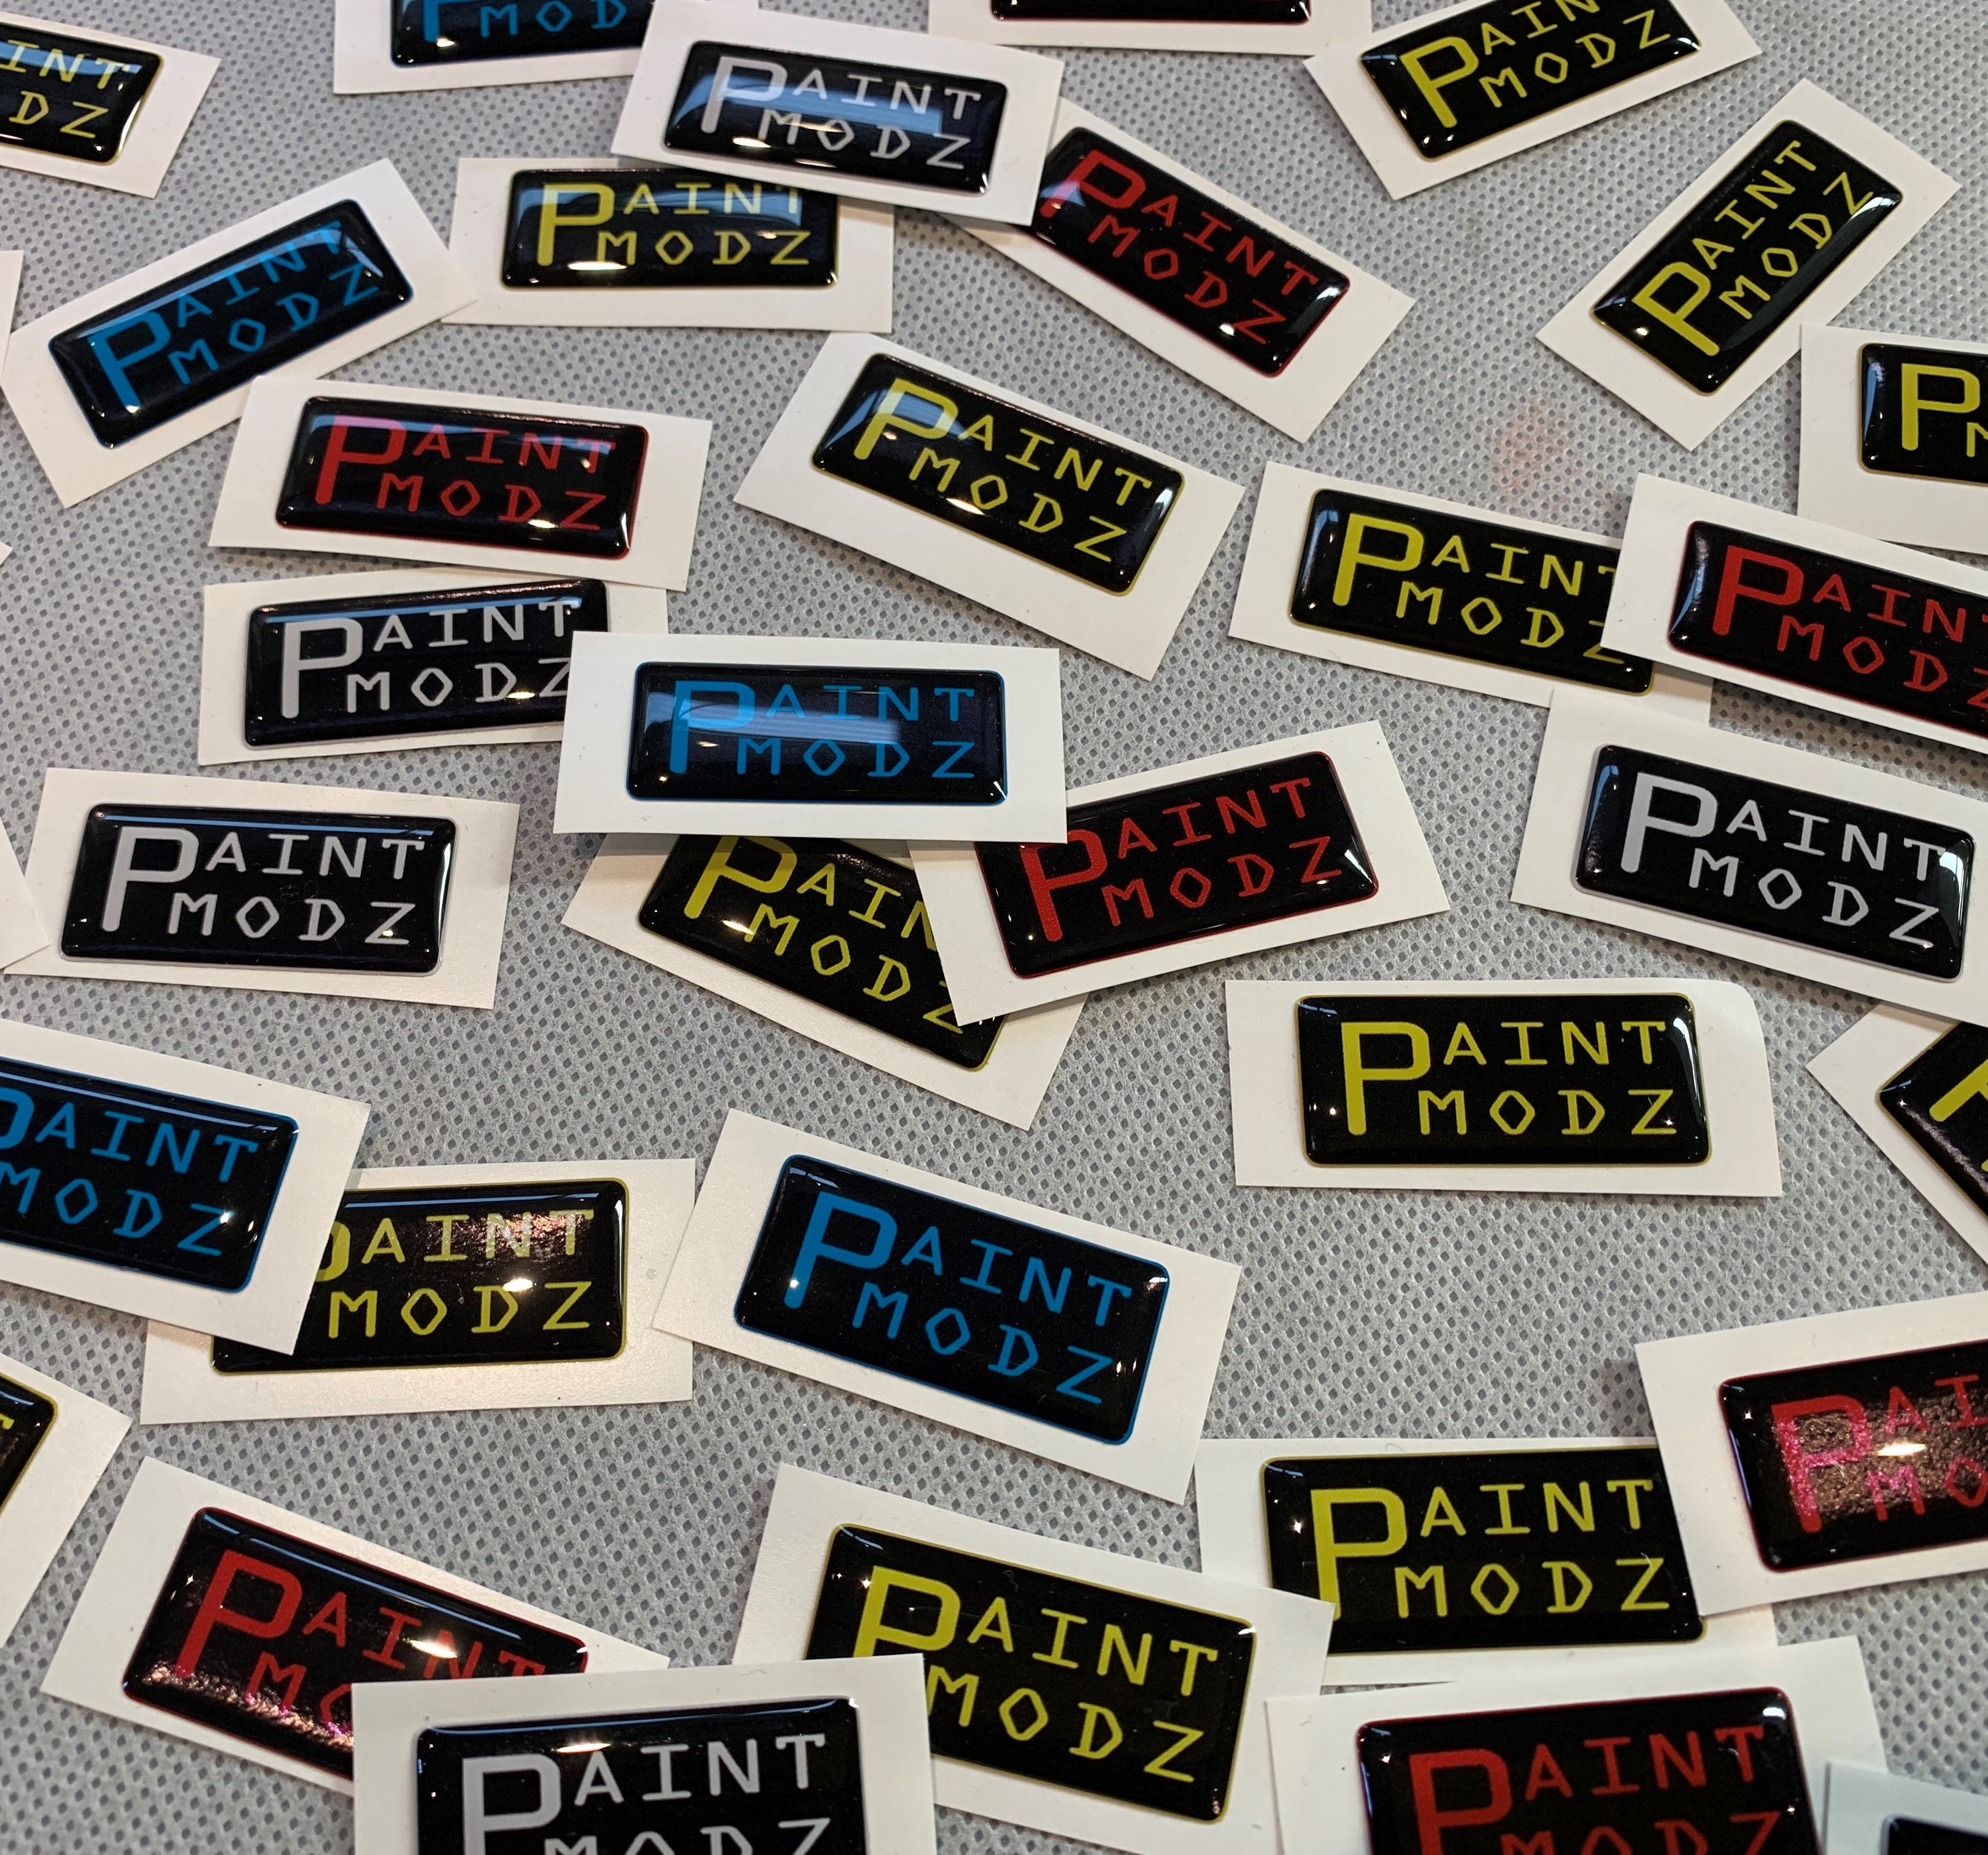 PaintModz custom gel badges